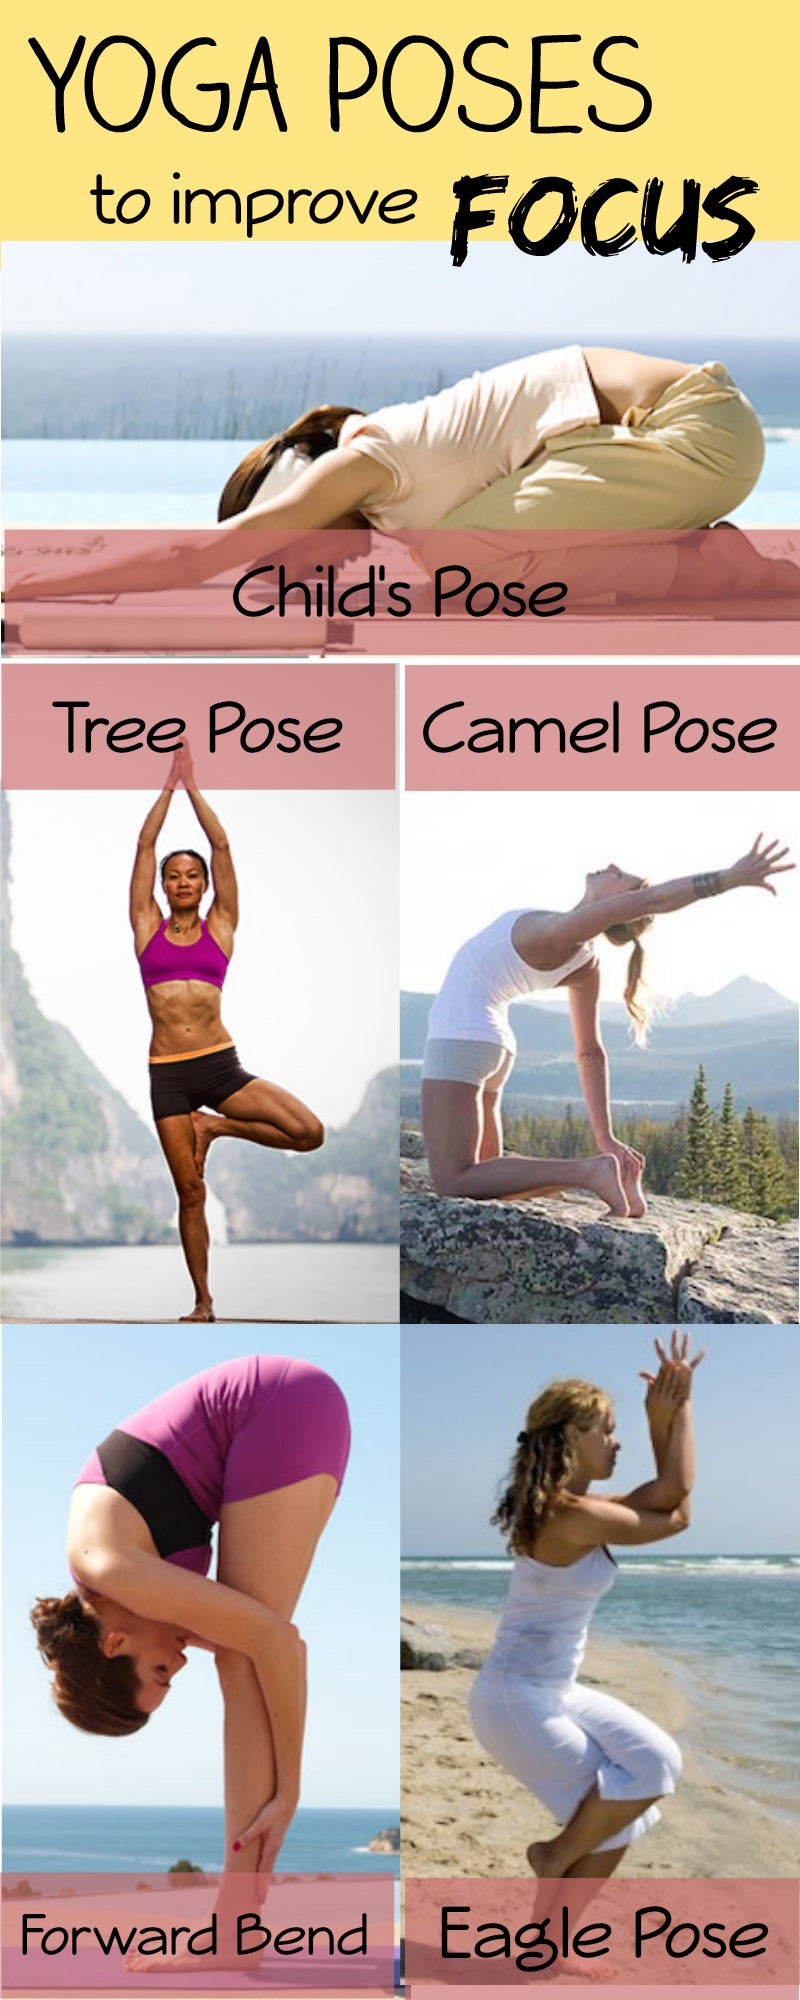 Cool yoga poses everyone should do - Mostly Amélie